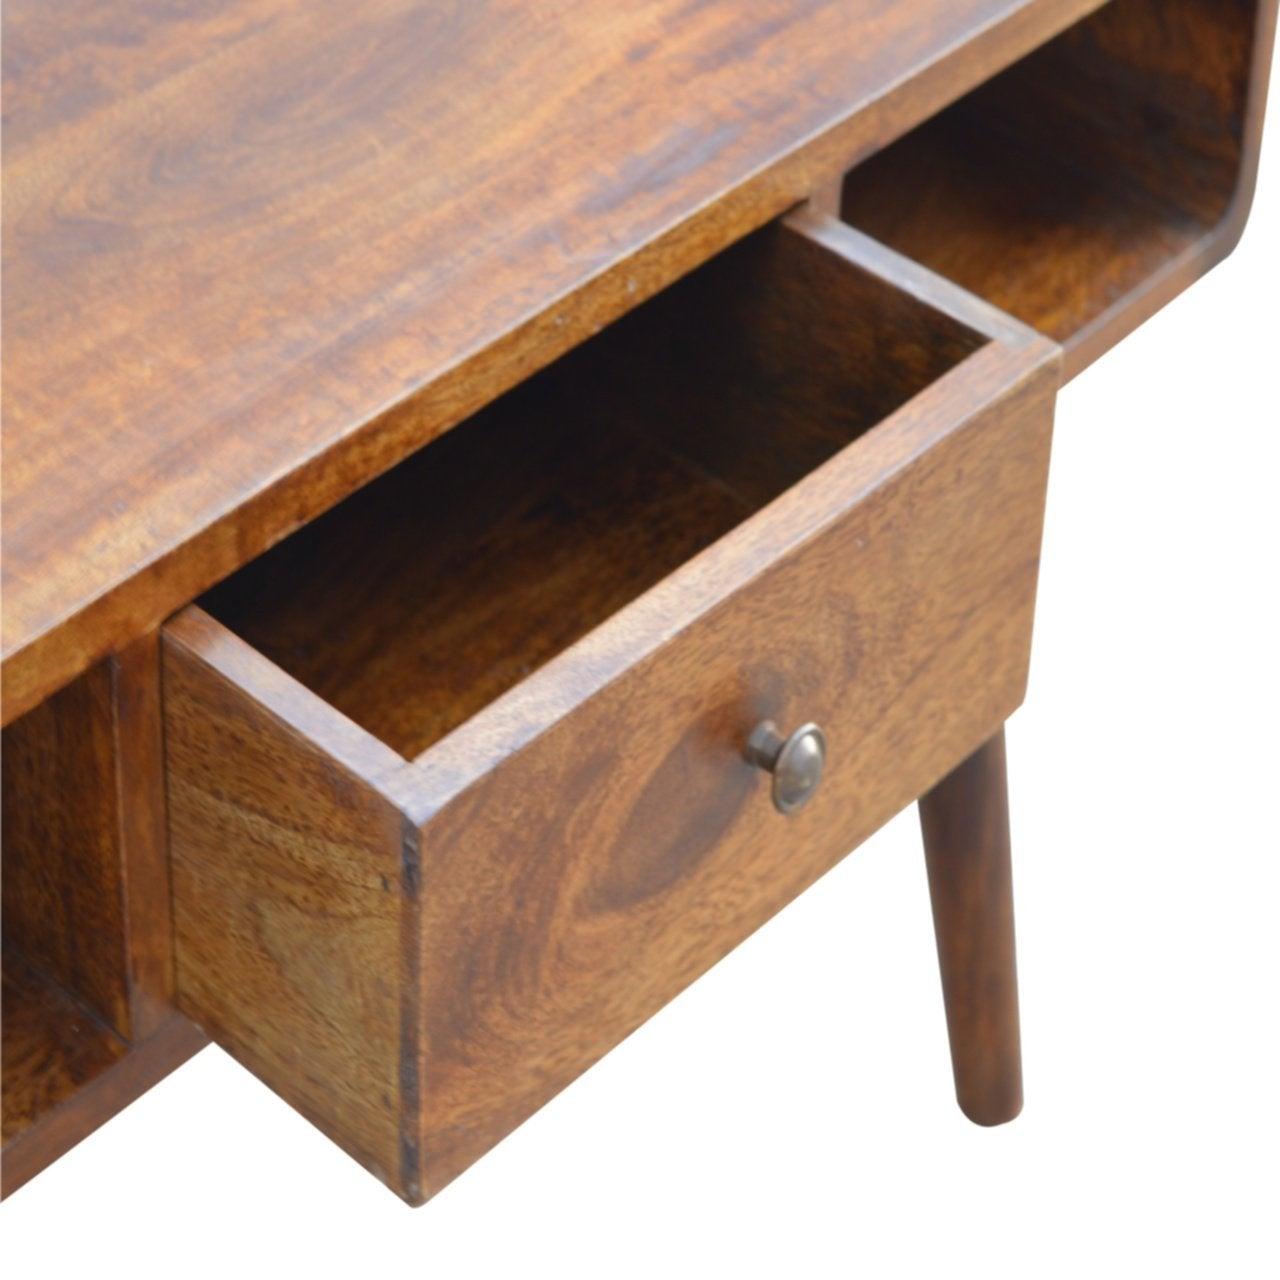 Curved chestnut coffee table - crimblefest furniture - image 6